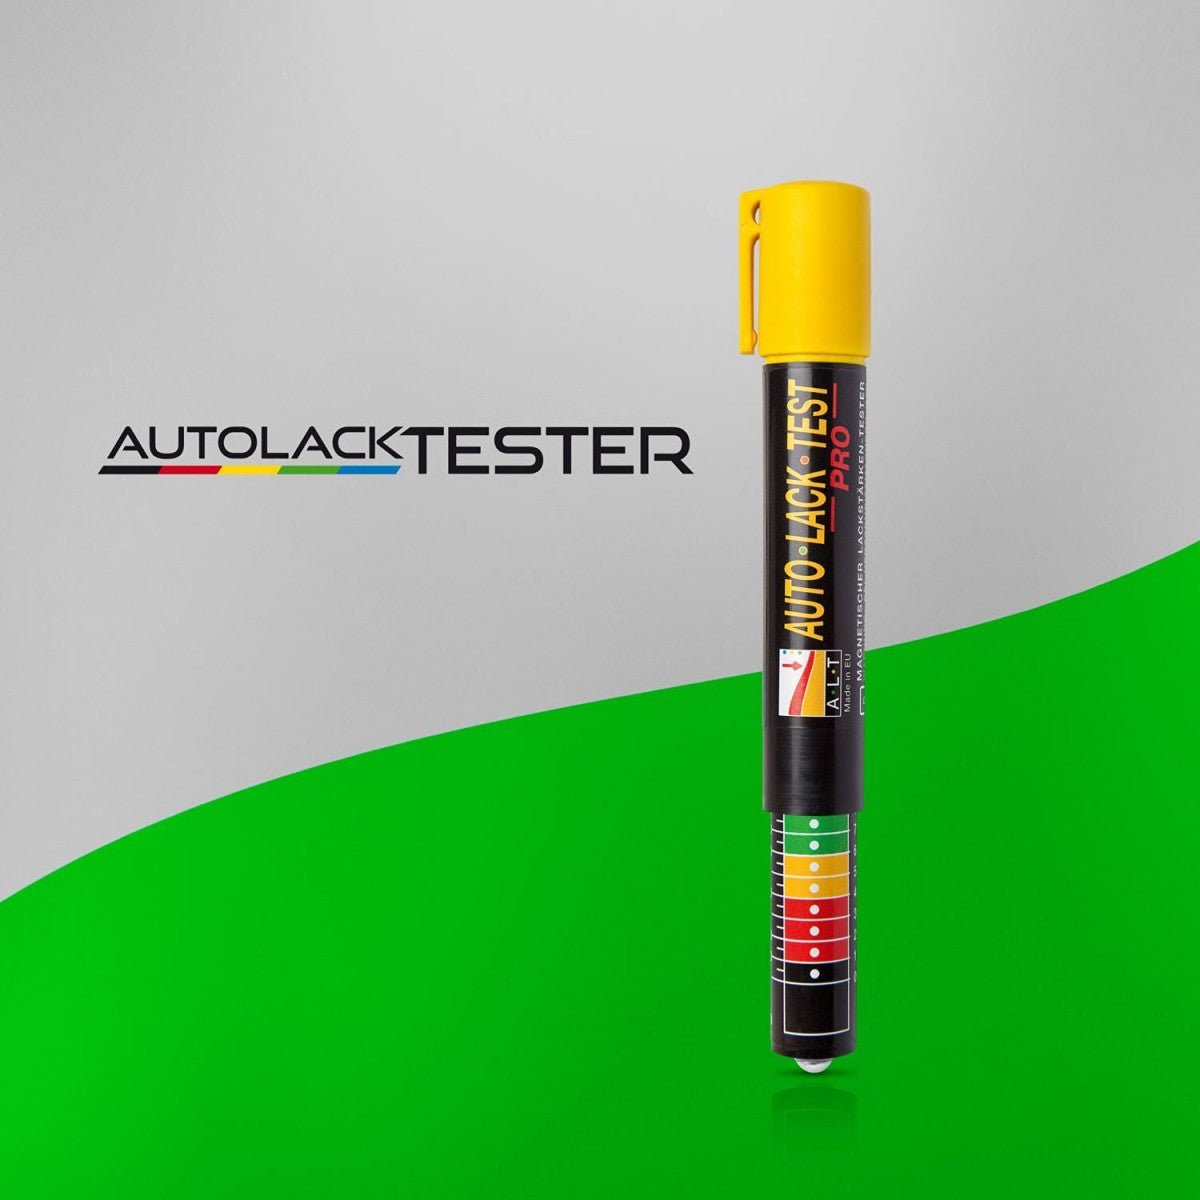 Autolack-Tester Pro - Das Original - 1 Stück - CLEANOFANT